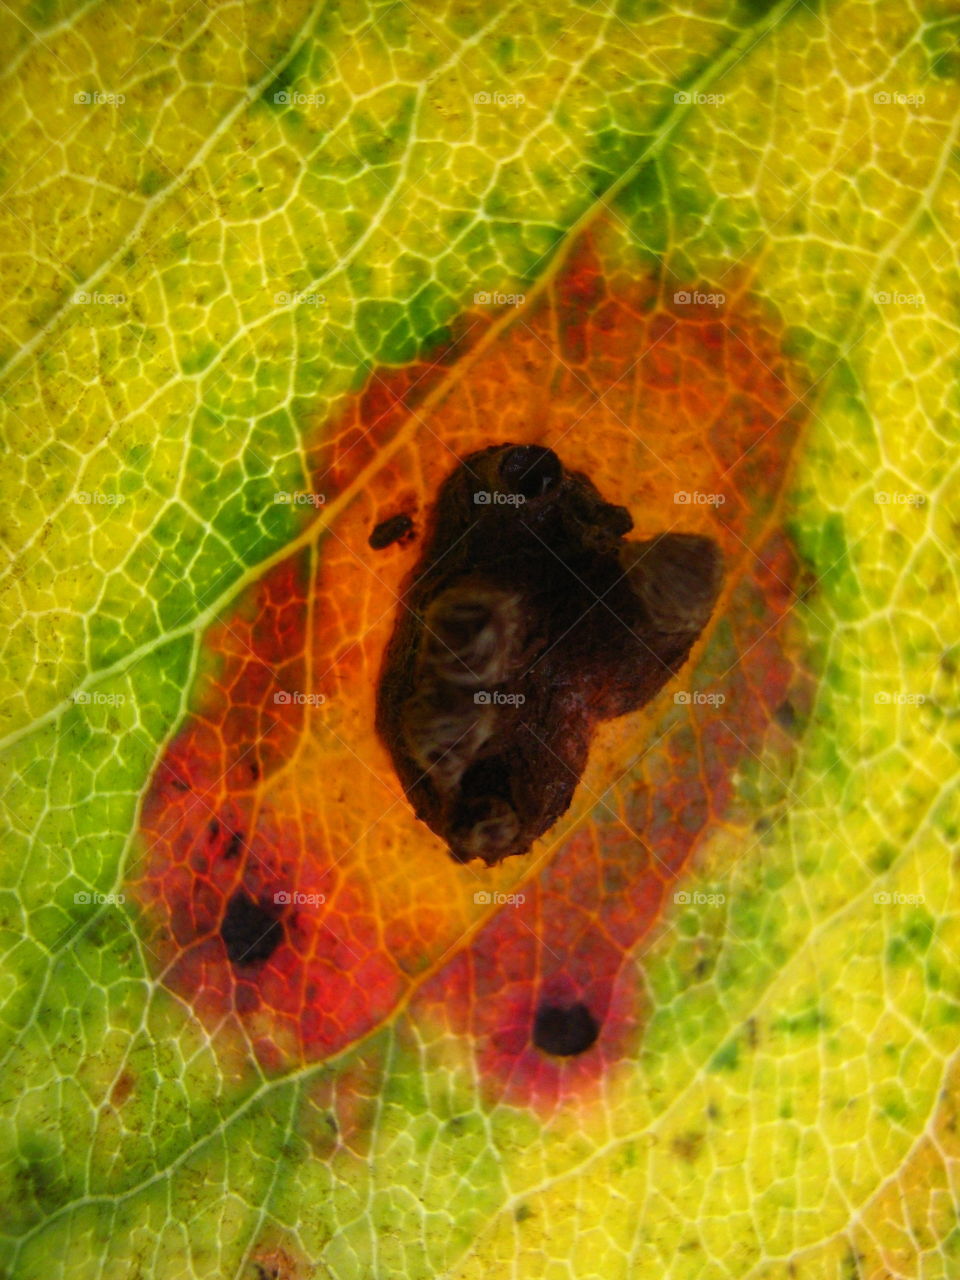 Pear leaf, blistered. Fireworks when backlighted